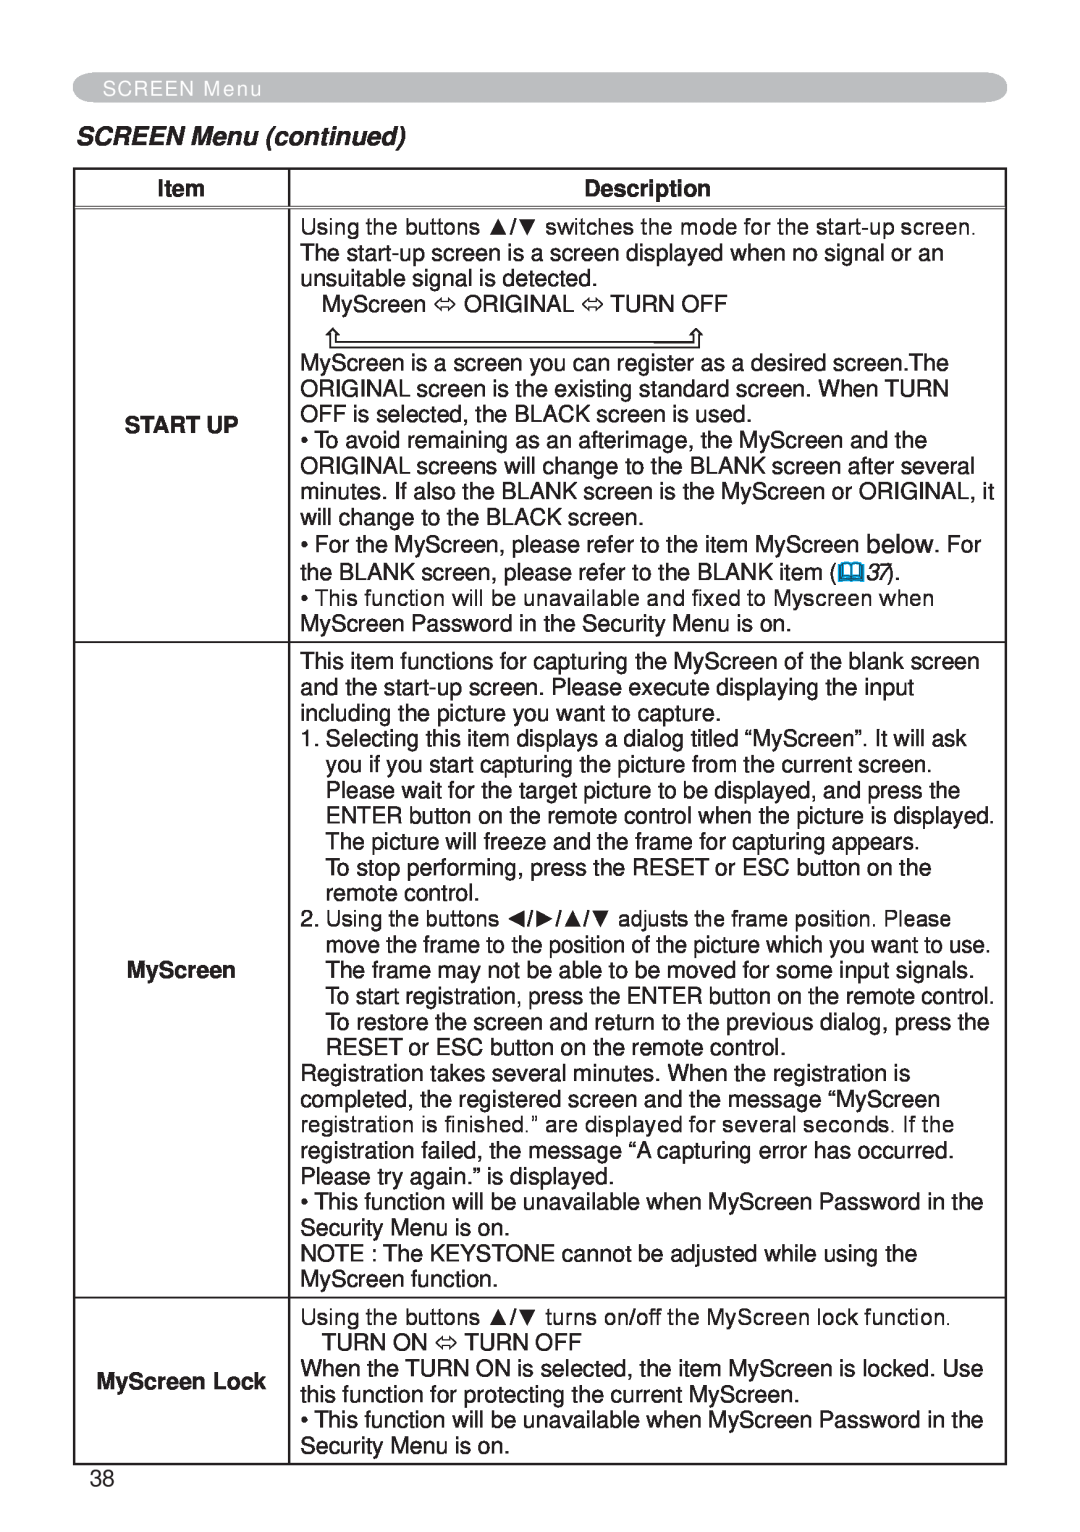 Hitachi CP-X265 user manual SCREEN Menu continued, Description, Start Up, MyScreen Lock 